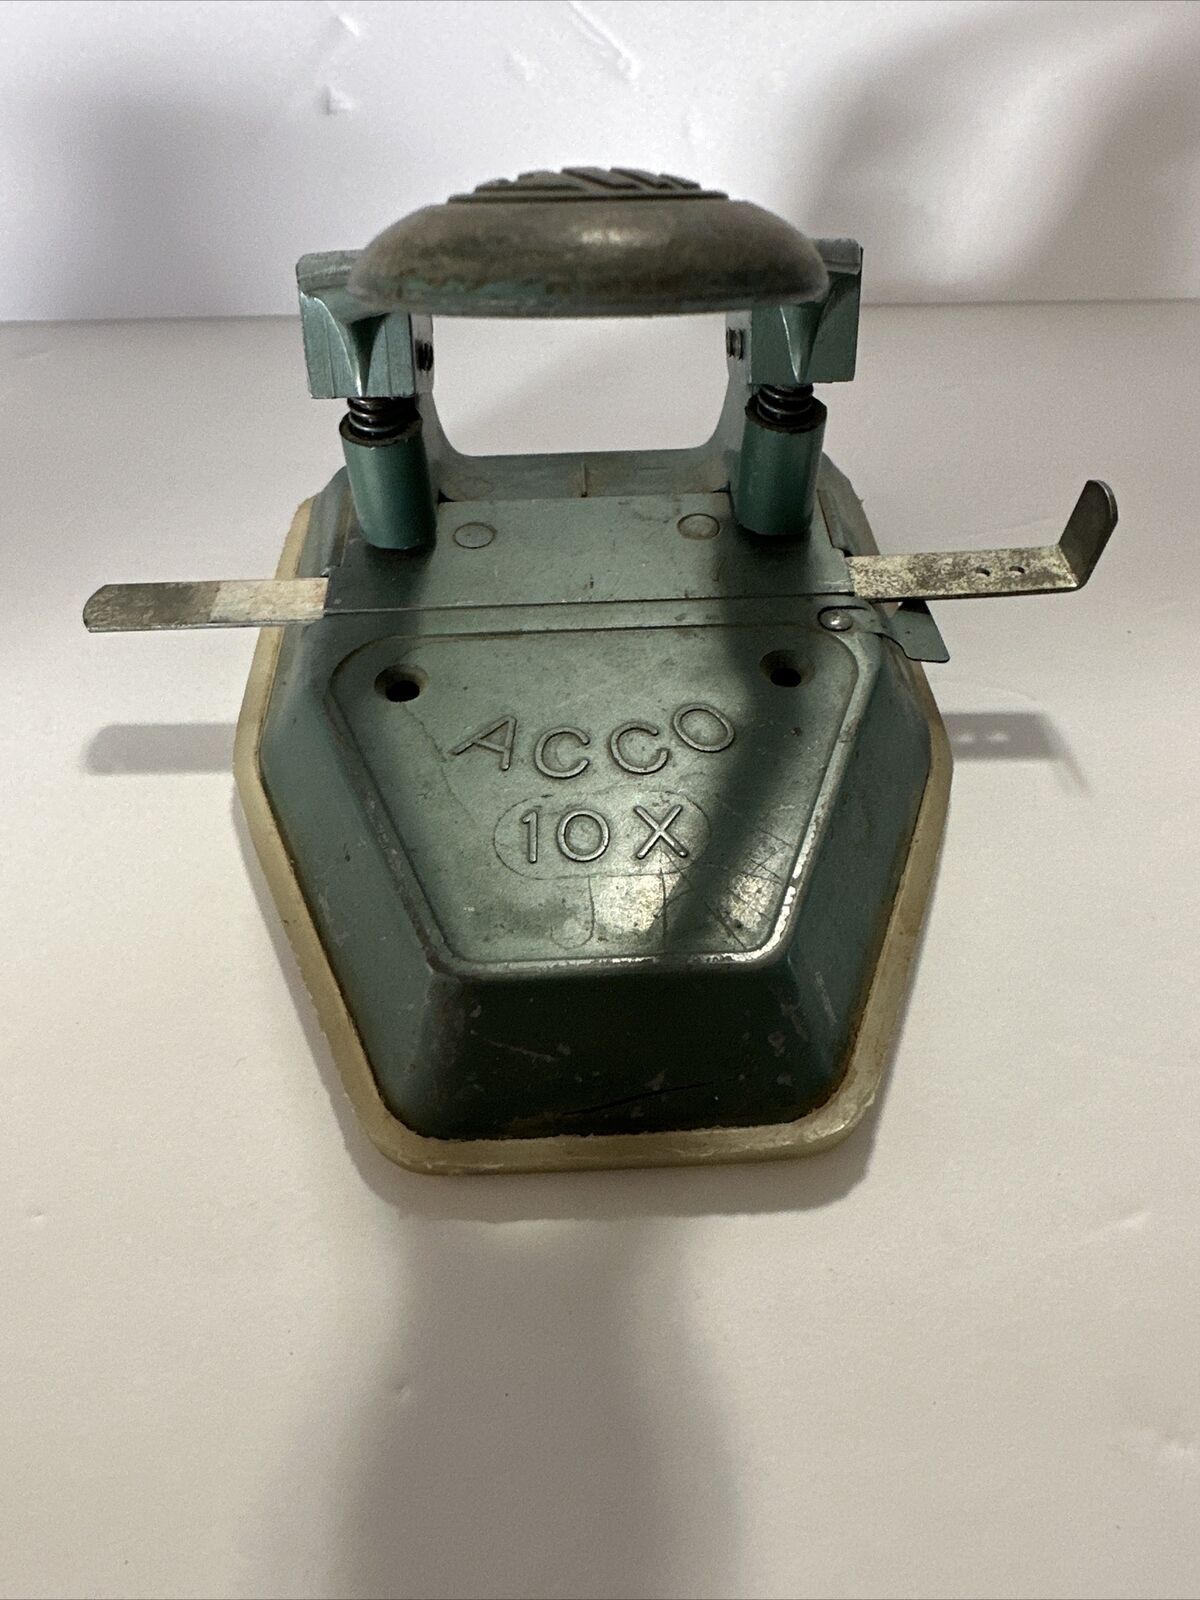 Vintage ACCO 10 S 2 Hole Punch Office Equipment Collectible Desktop ART DECO EUC